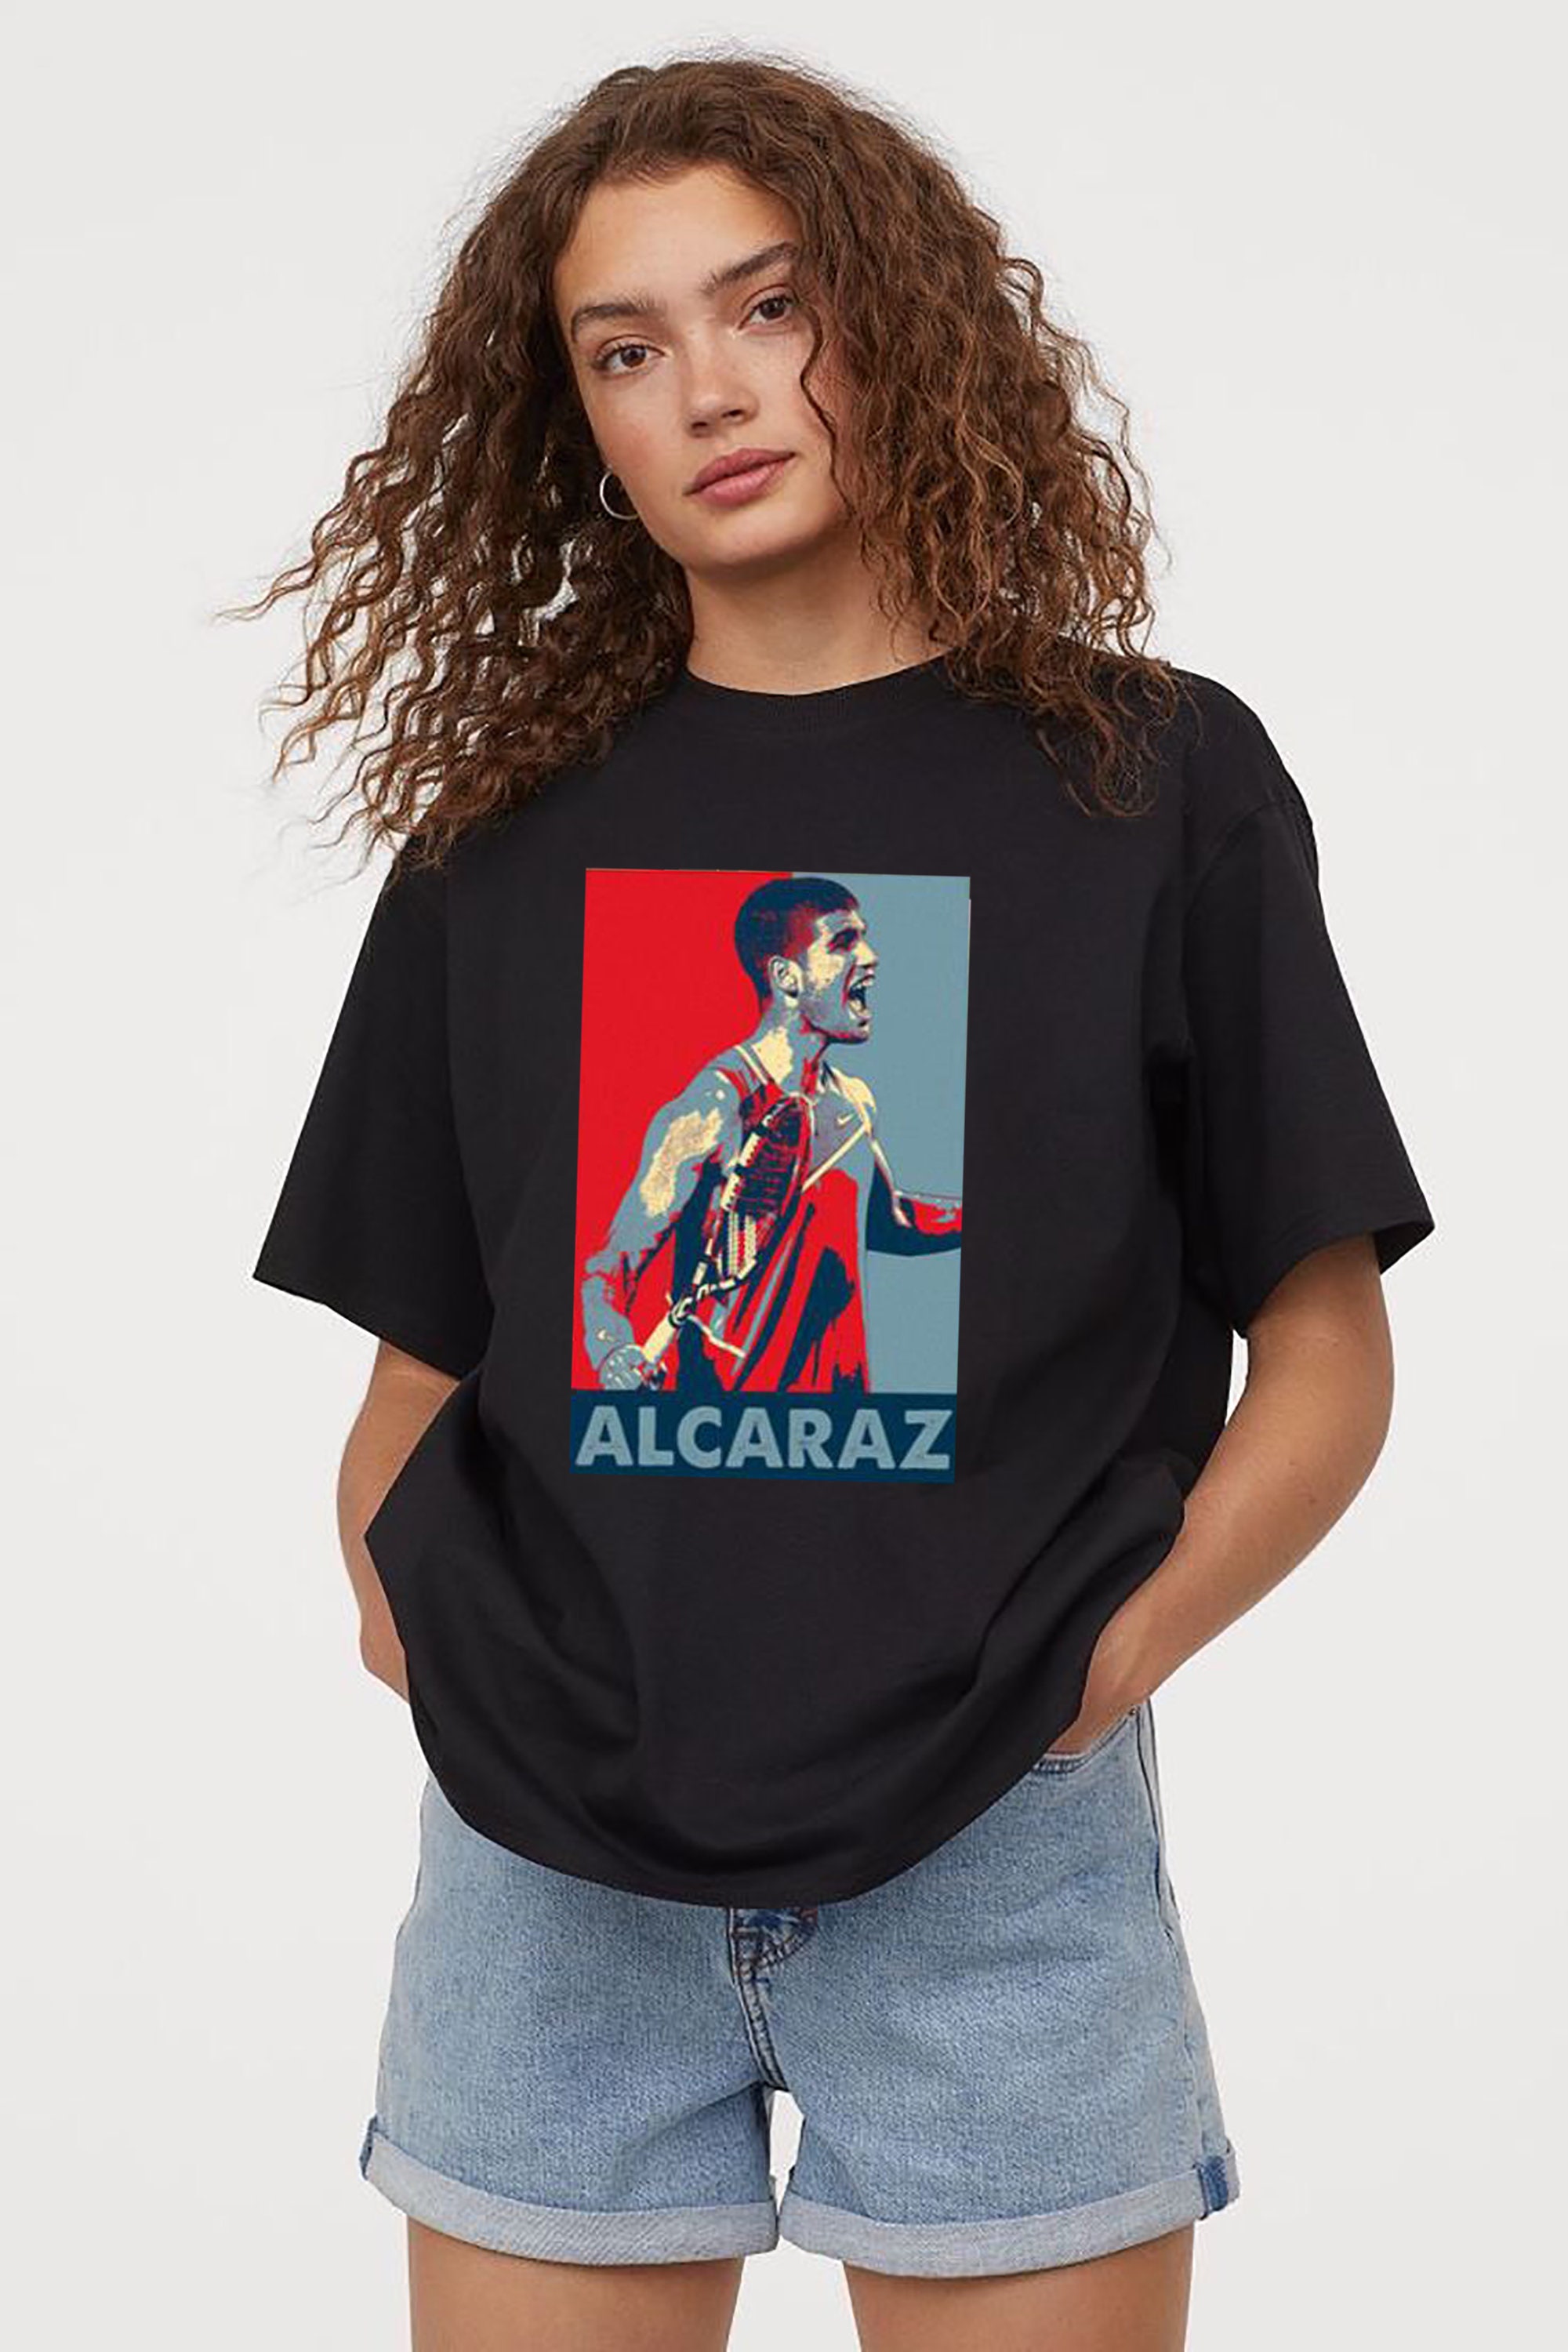 Carlos Alcaraz Tennis Player Frances Tiafoe T-Shirt, US Open 2022 Tennis